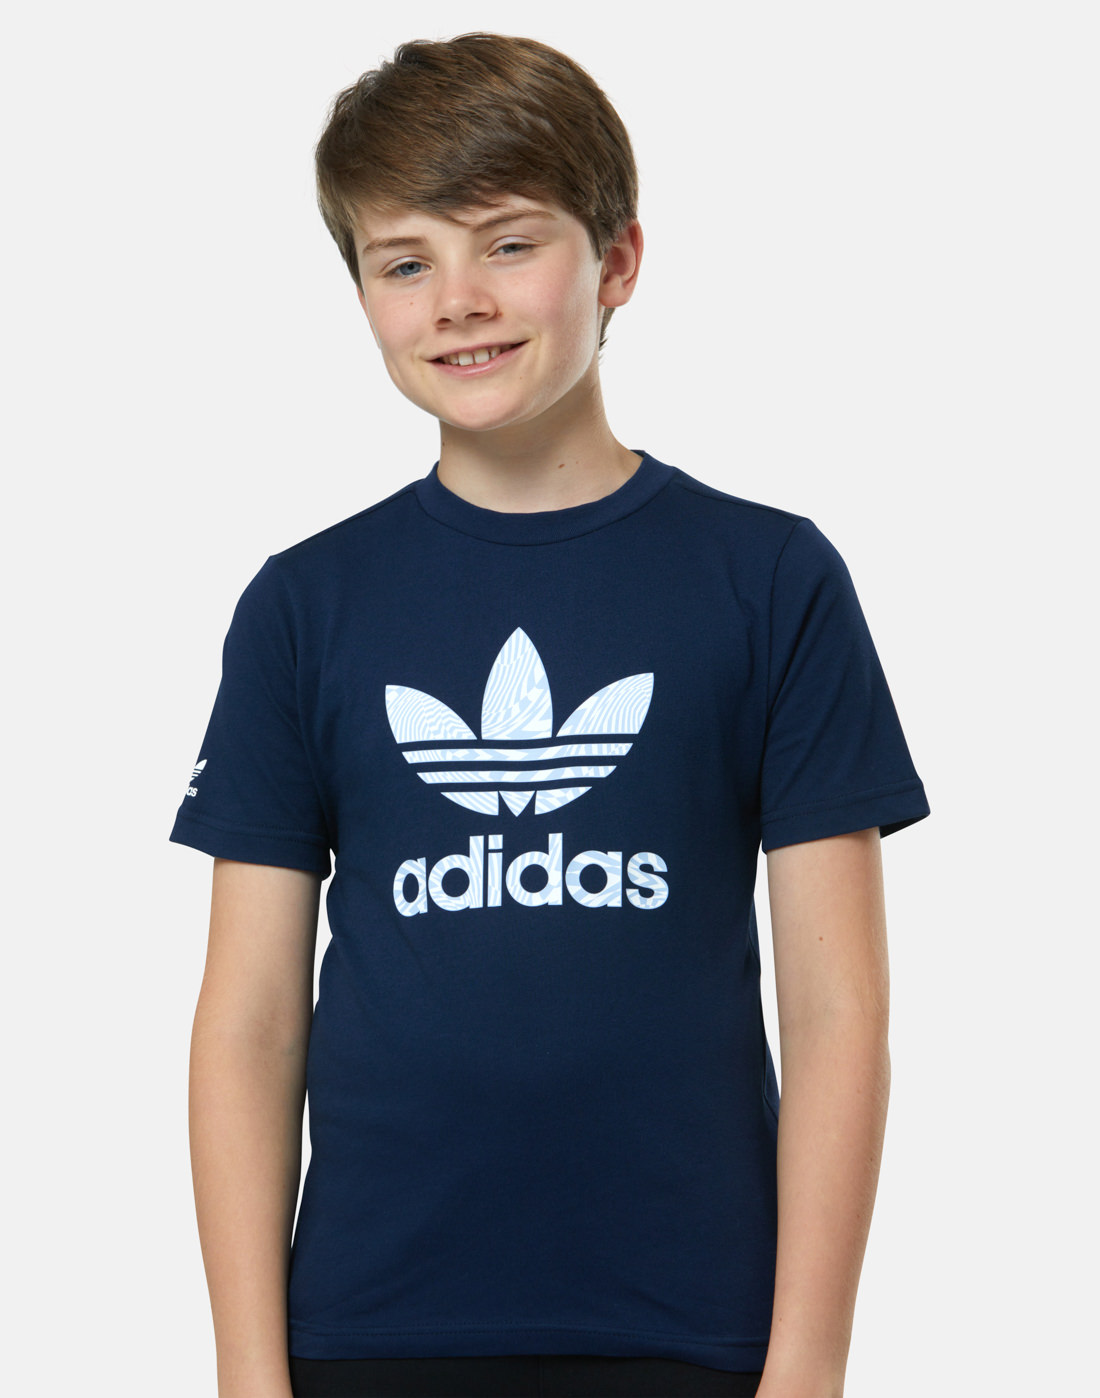 adidas Originals Older Boys T-Shirt - Navy | Life Style Sports EU